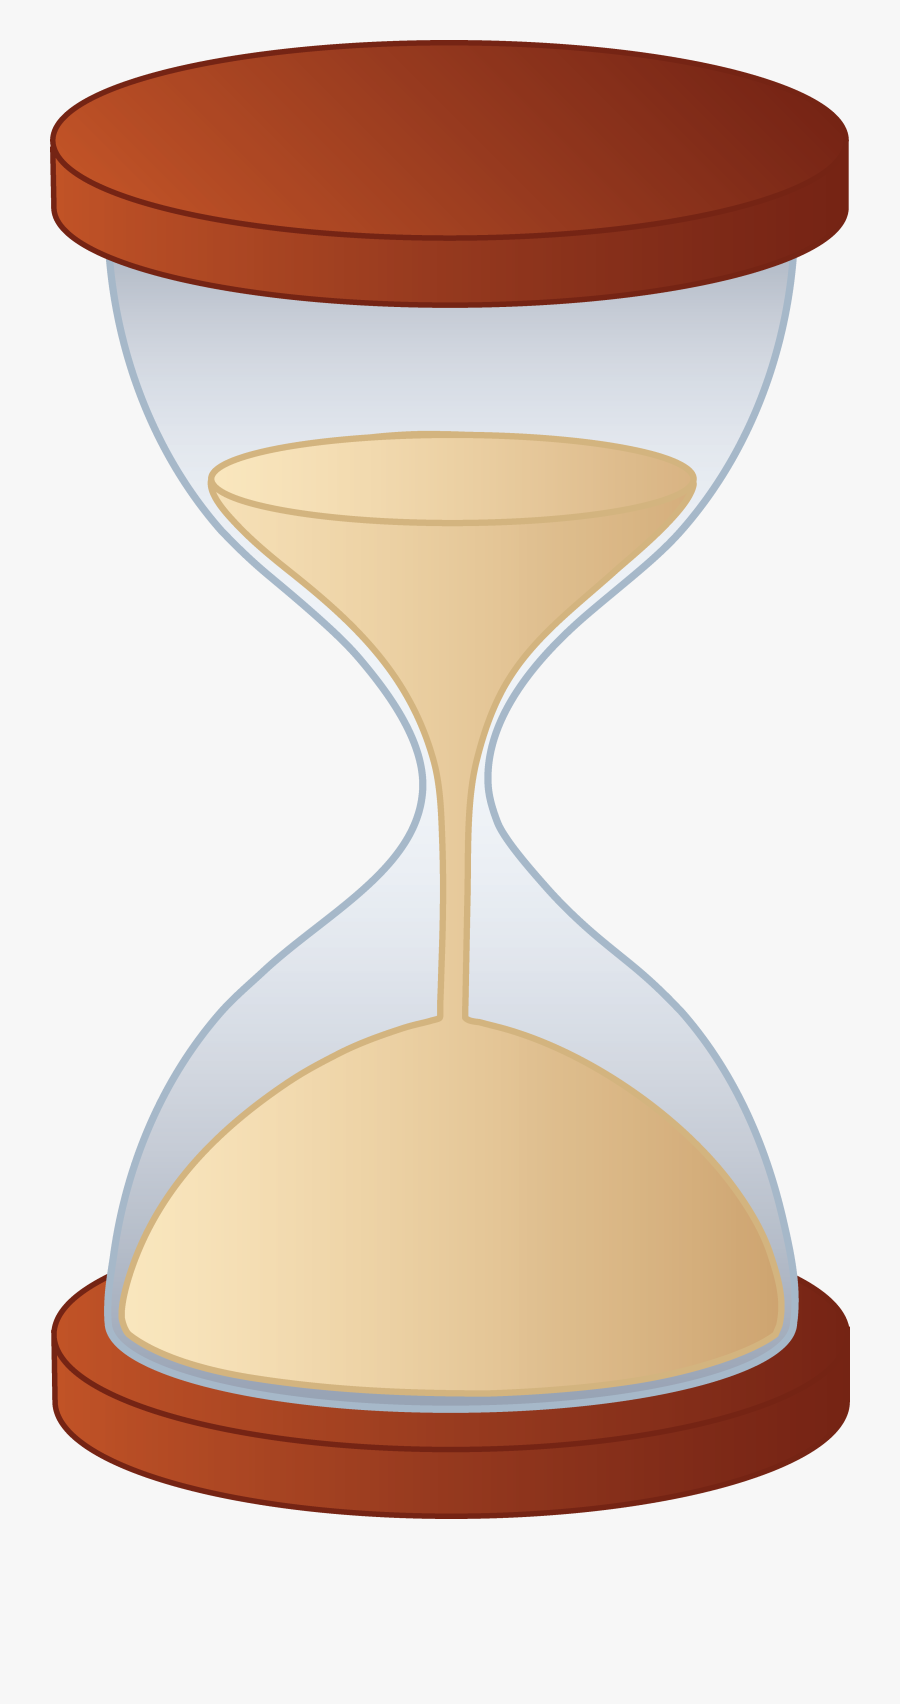 Timer Clipart Clipart - Hourglass Clipart, Transparent Clipart